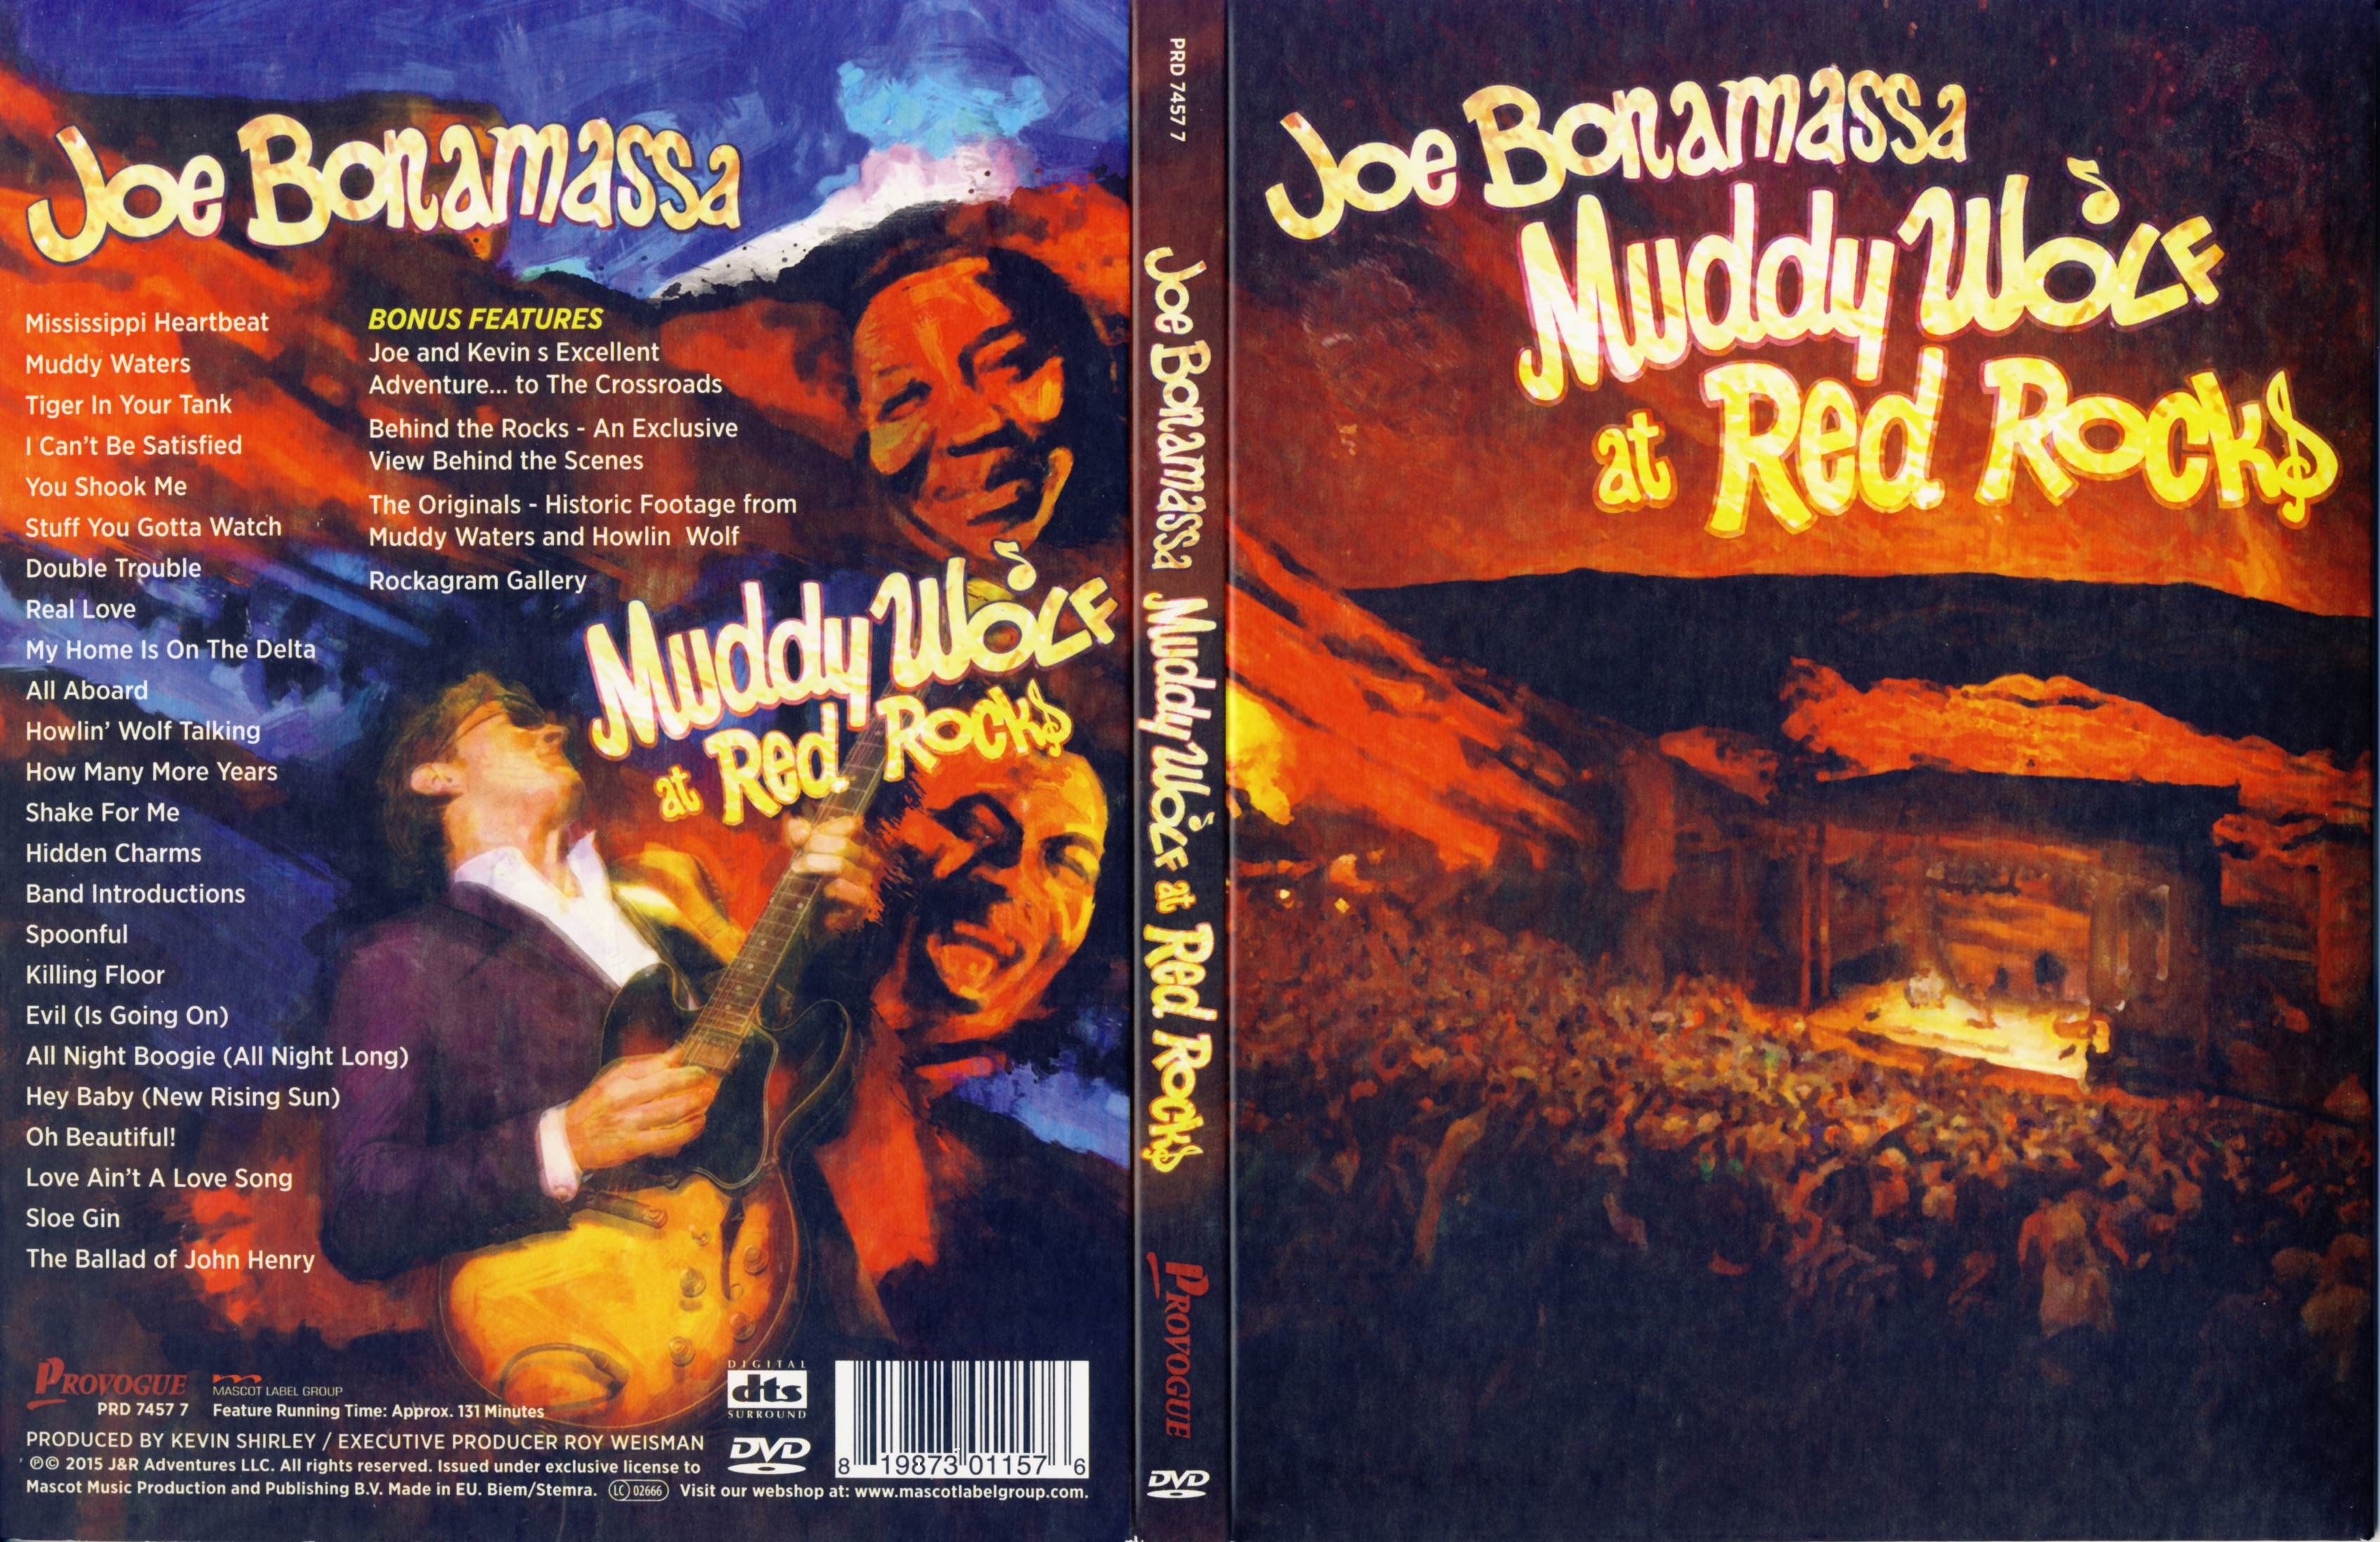 Jaquette DVD Joe Bonamassa Muddy Wolf at red rocks